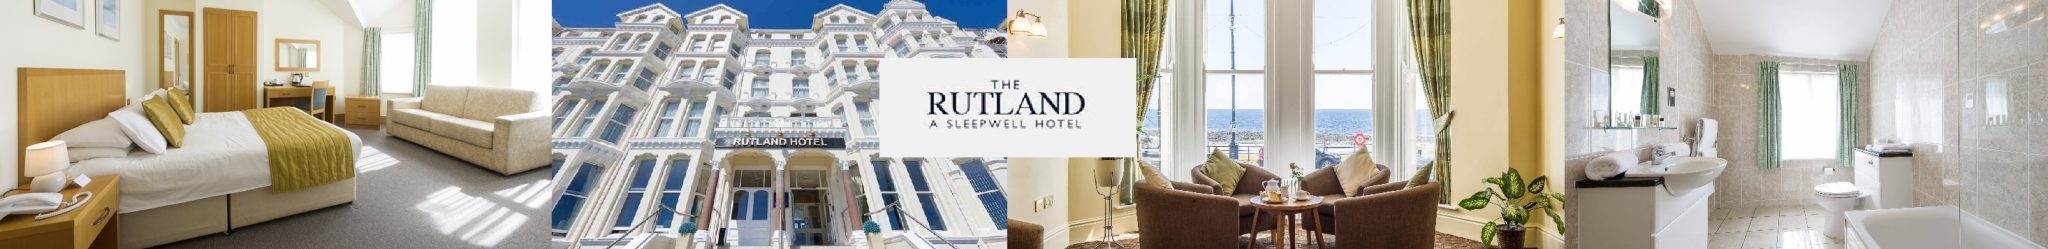 Rutland Hotel Isle of Man TT